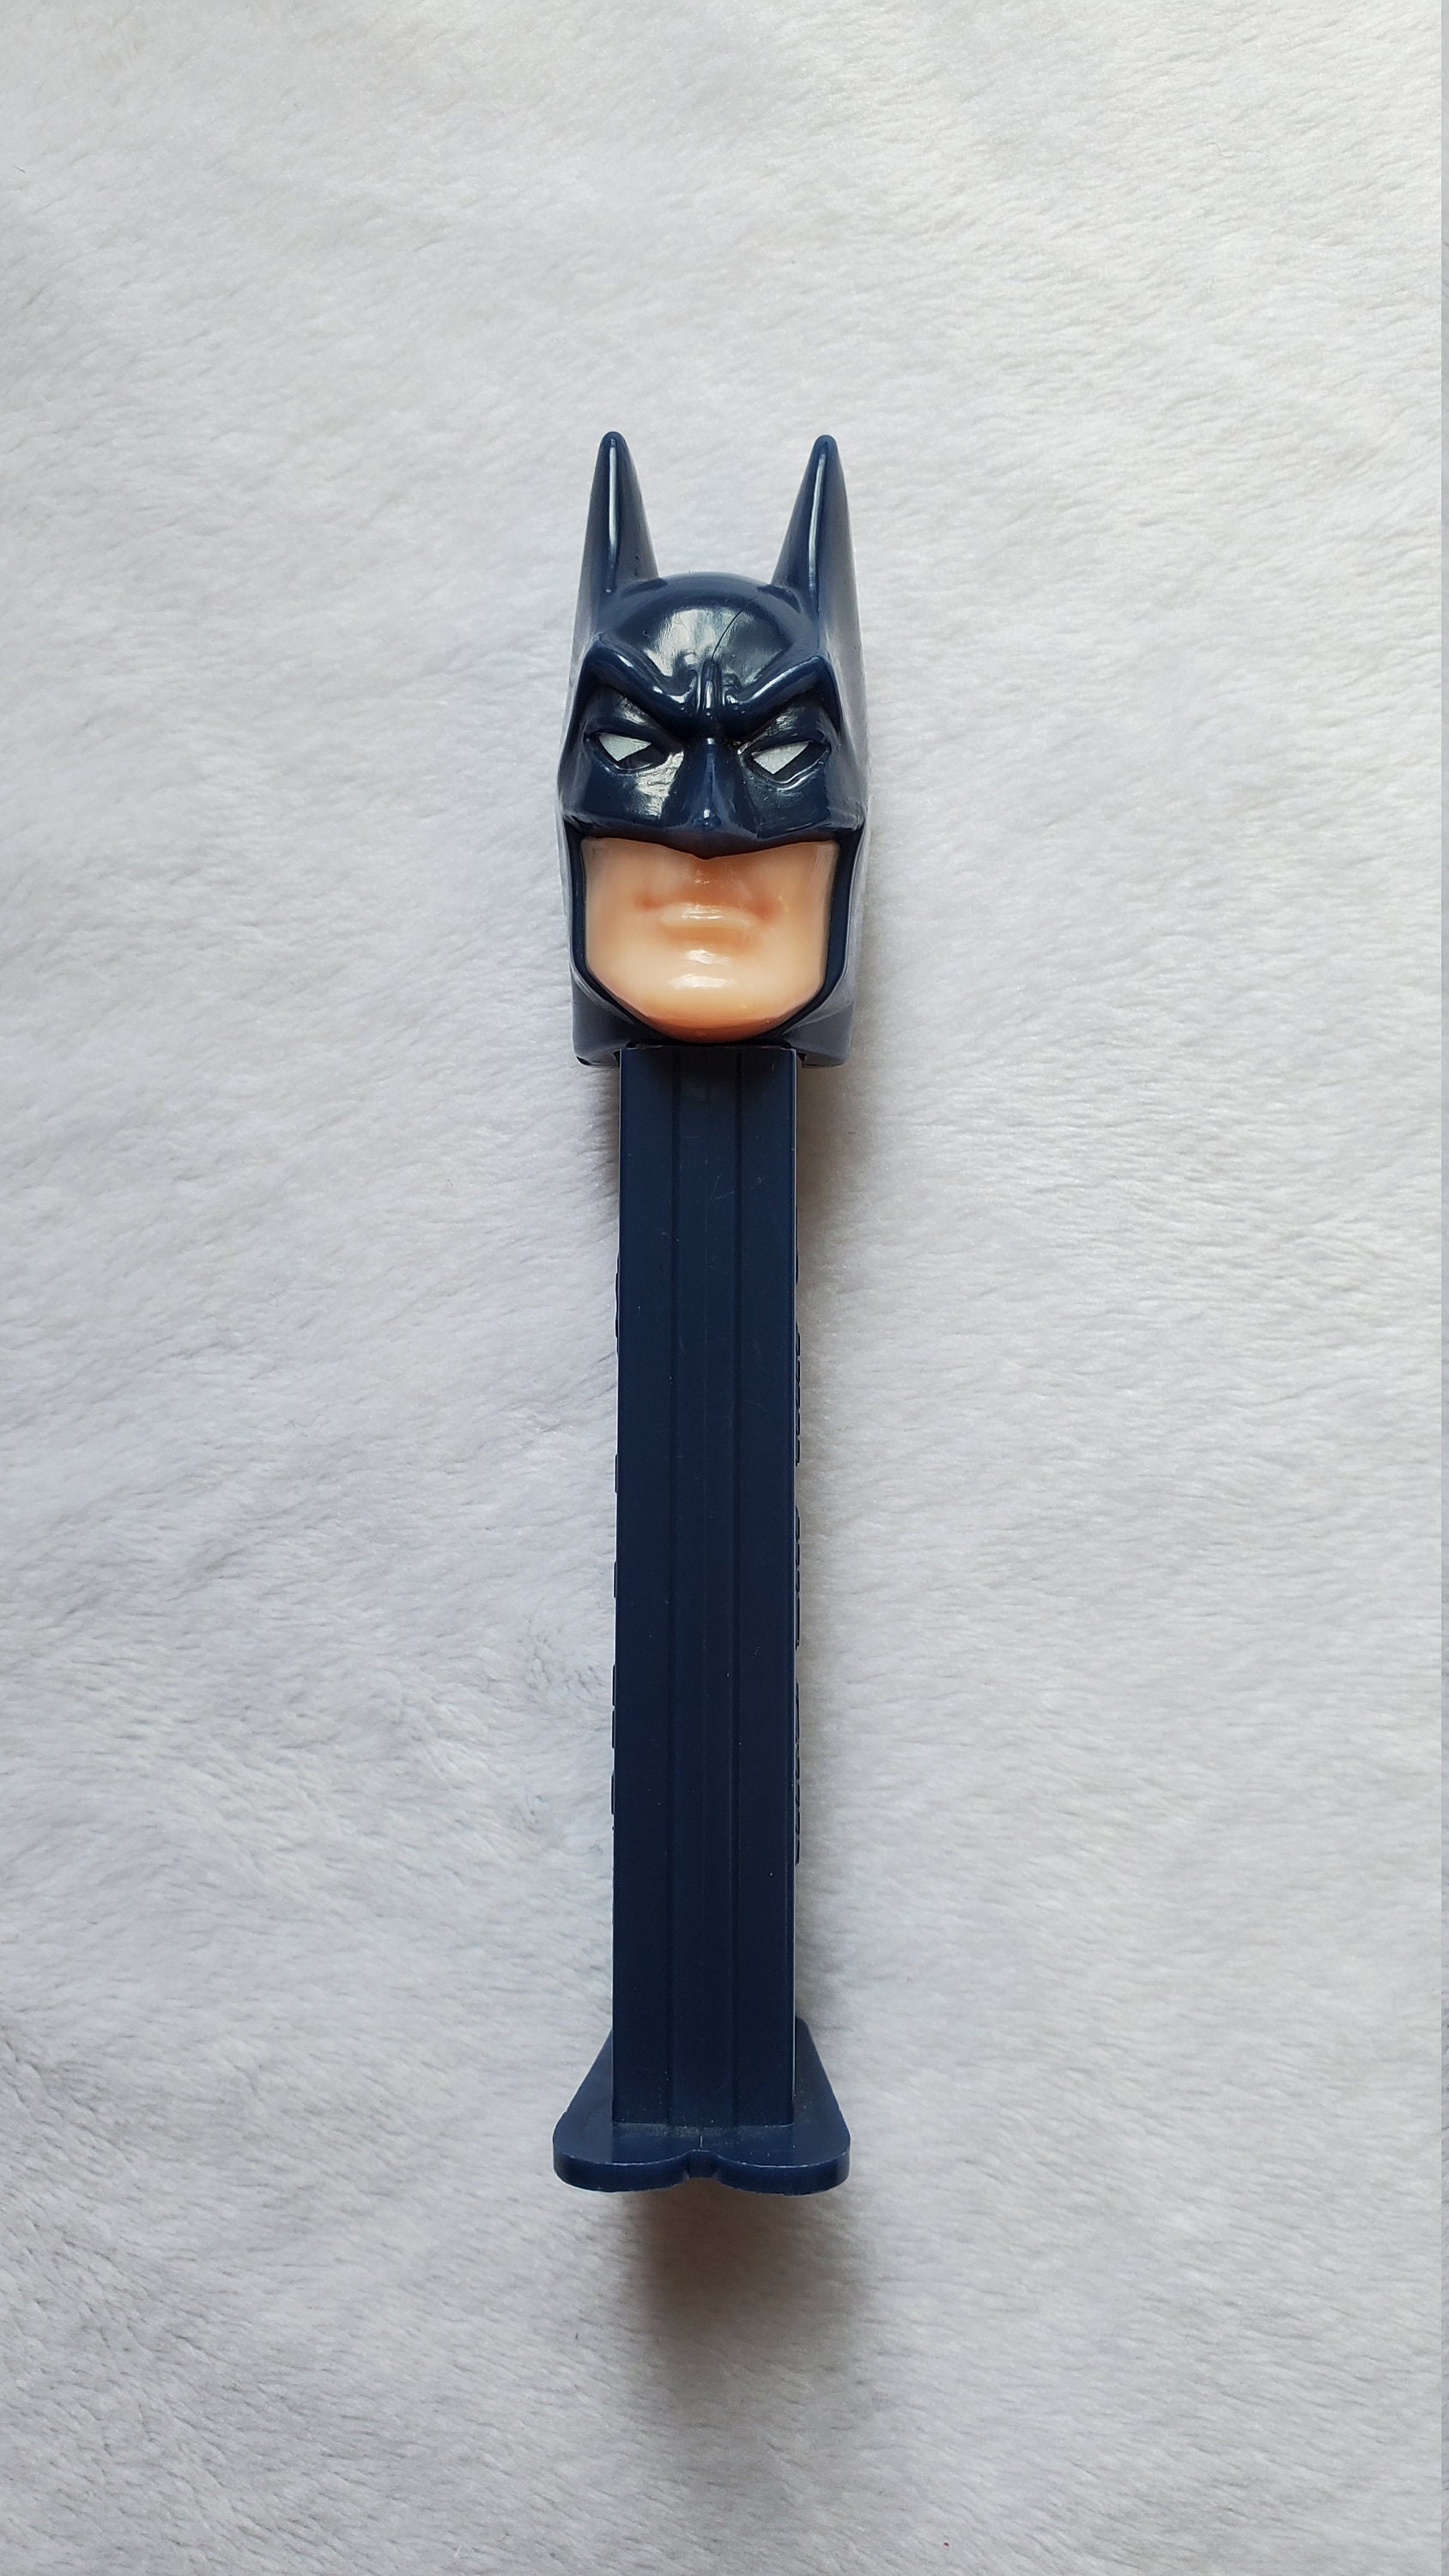 Batman Pez Candy Dispenser From 1995 - Etsy UK